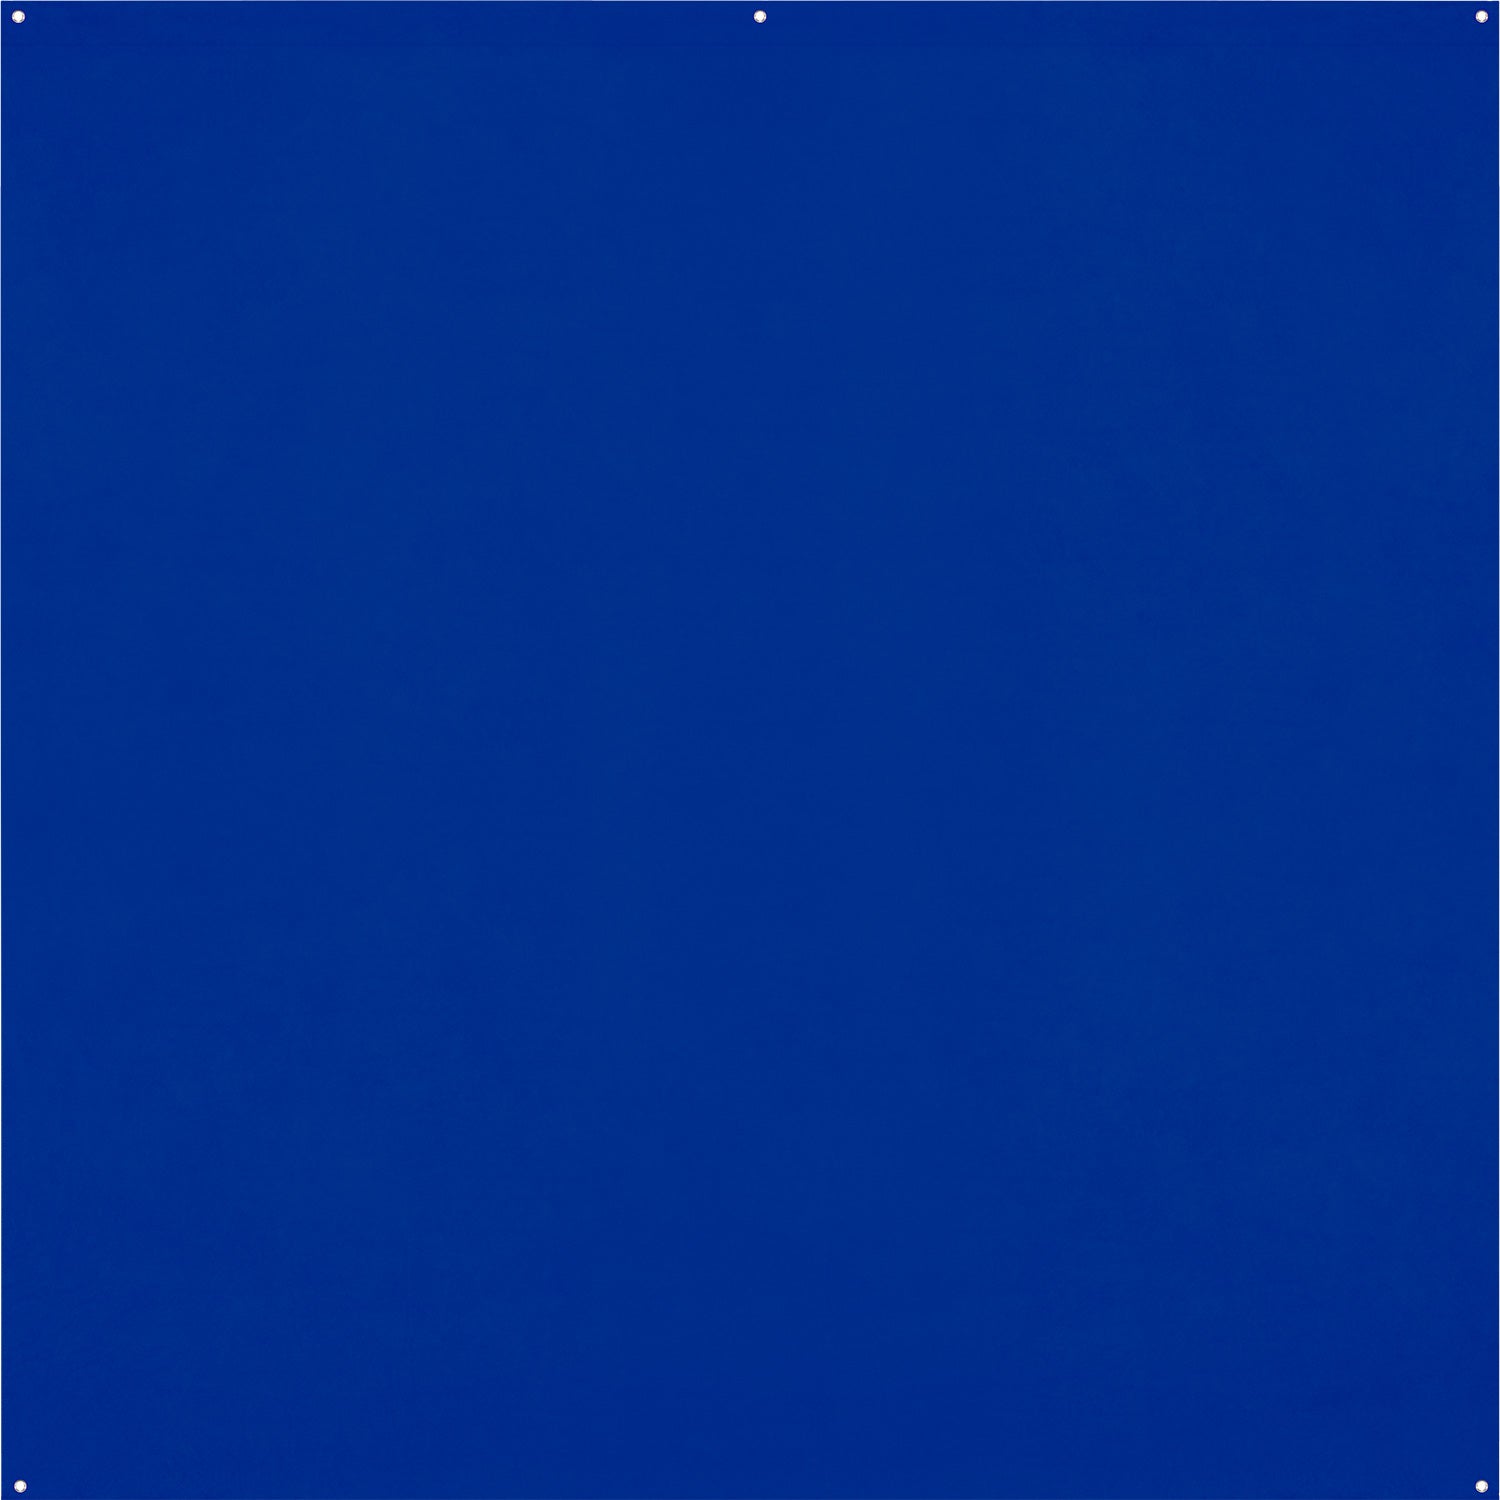 Wrinkle-Resistant Backdrop - Royal Blue / Chroma-Key Blue (8' x 8')